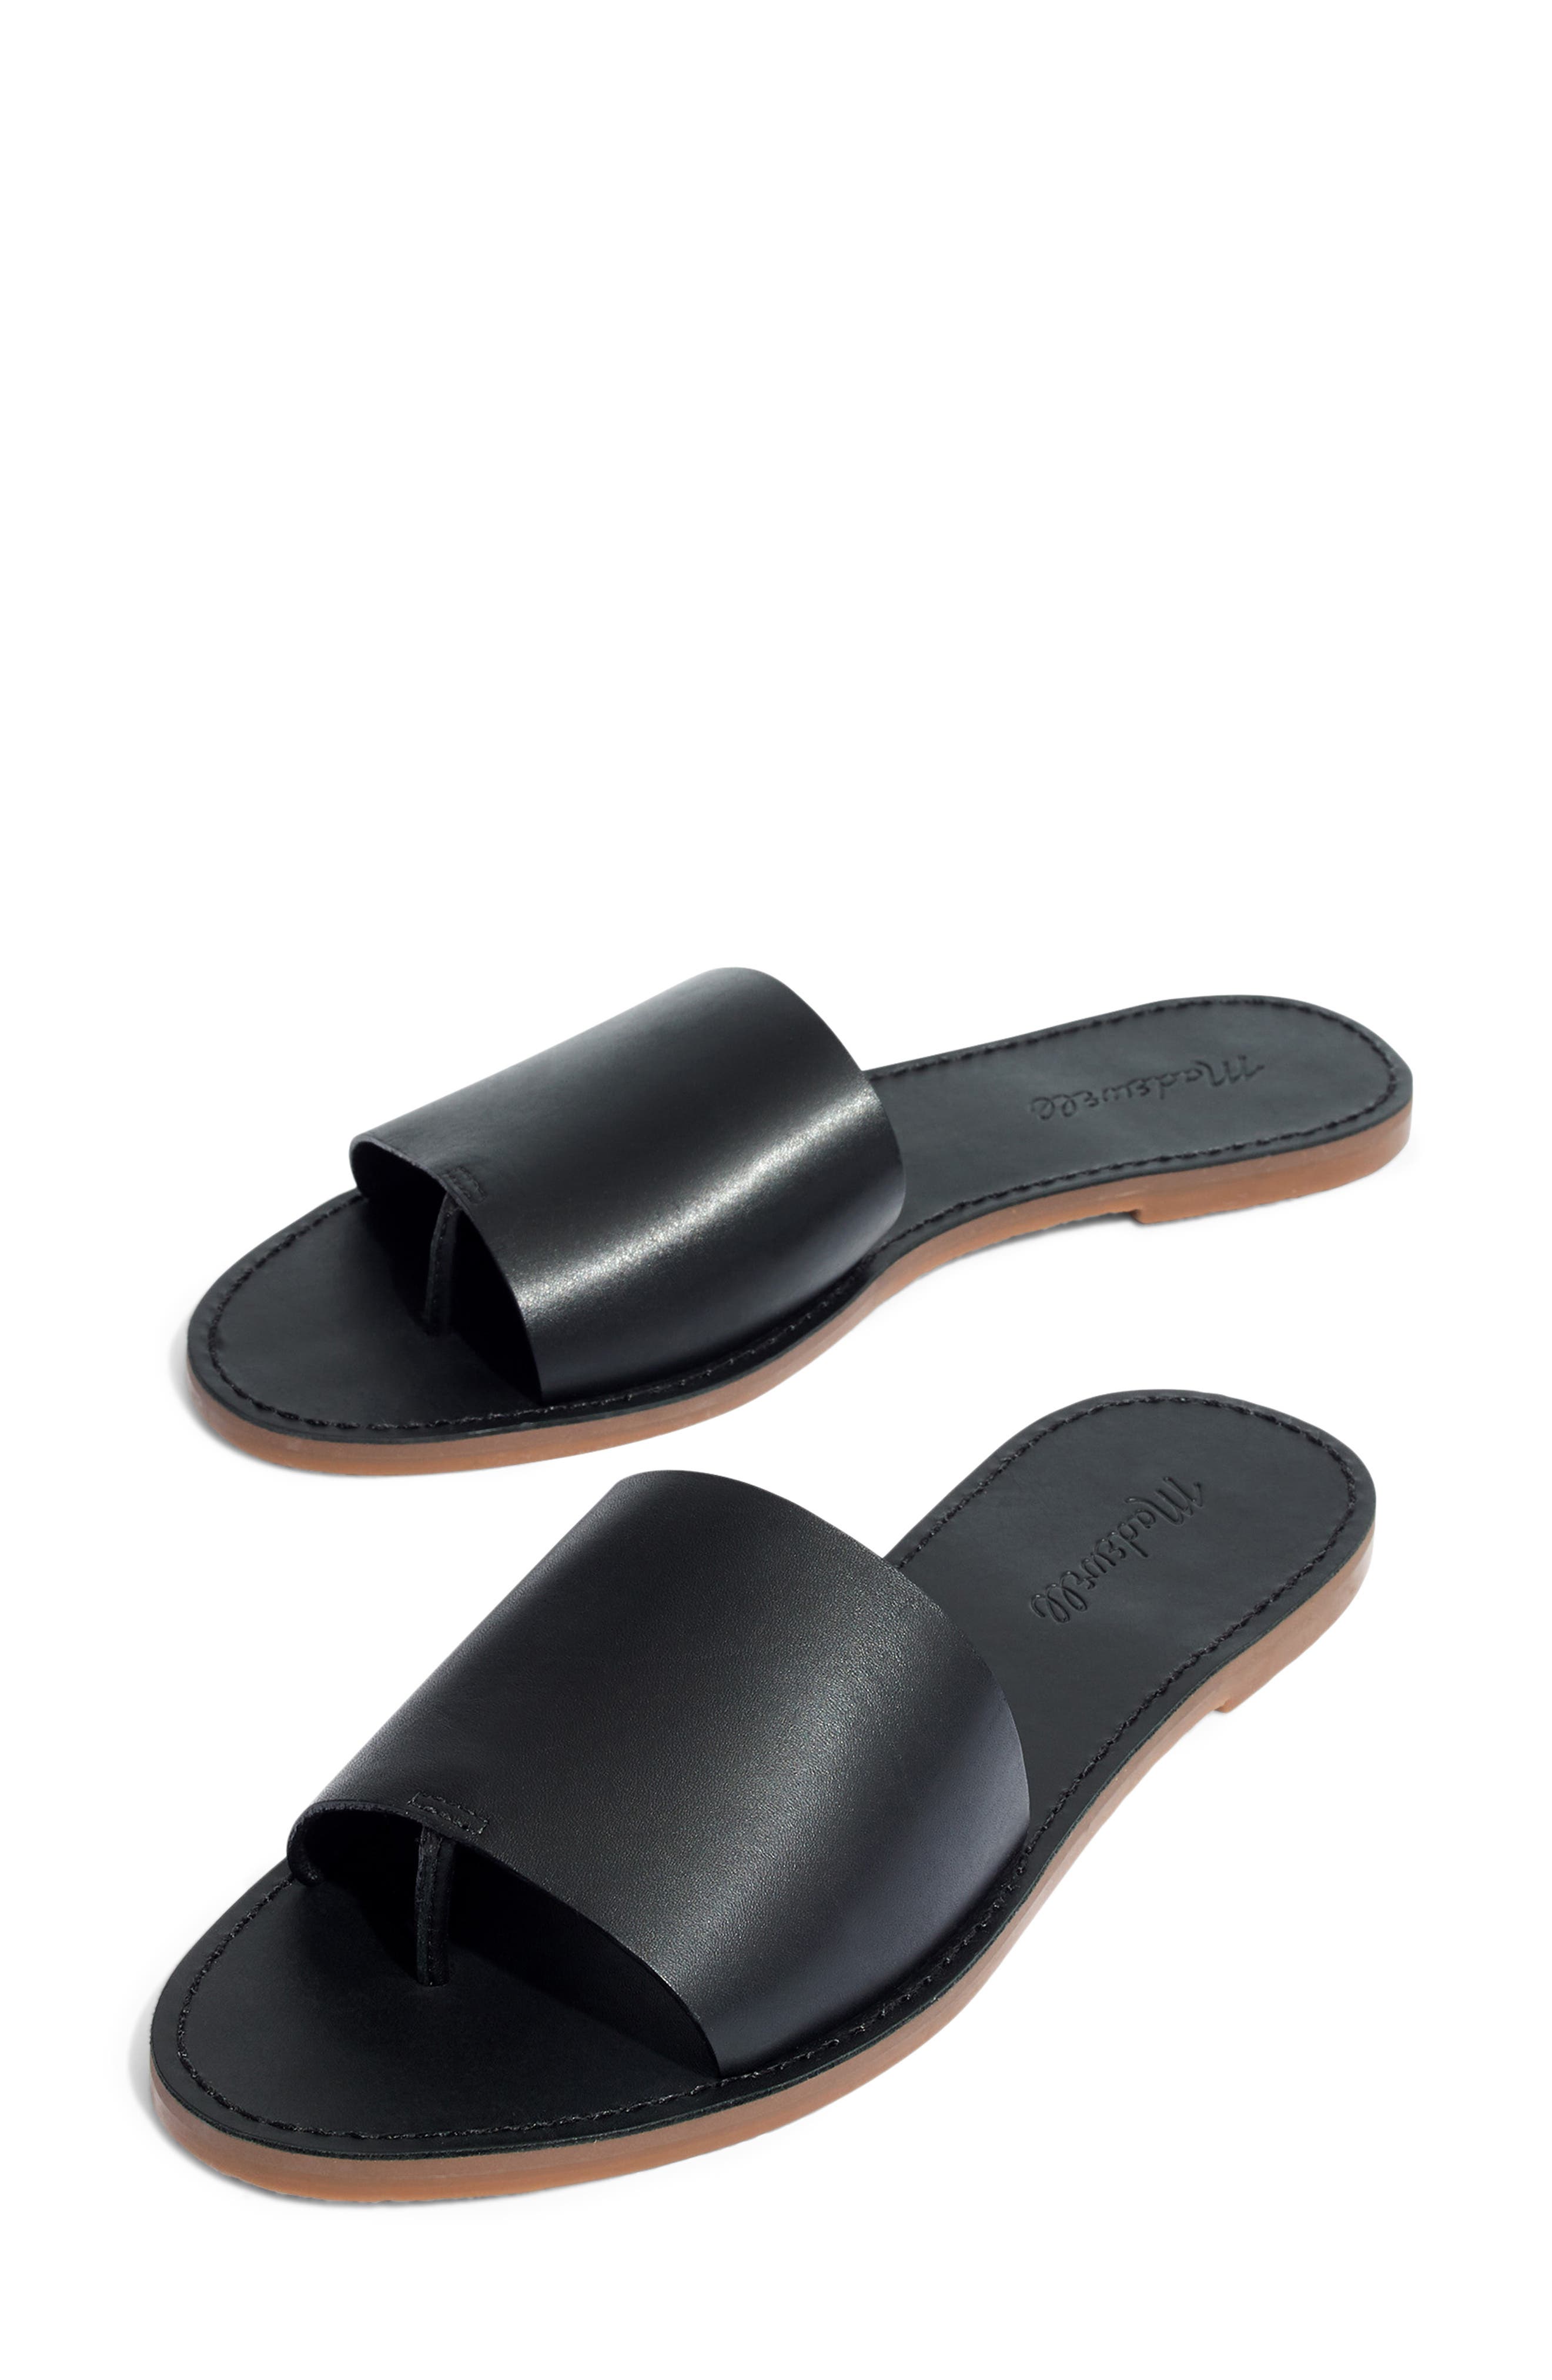 Slide Sandals Clearance, 58% OFF | www.emanagreen.com